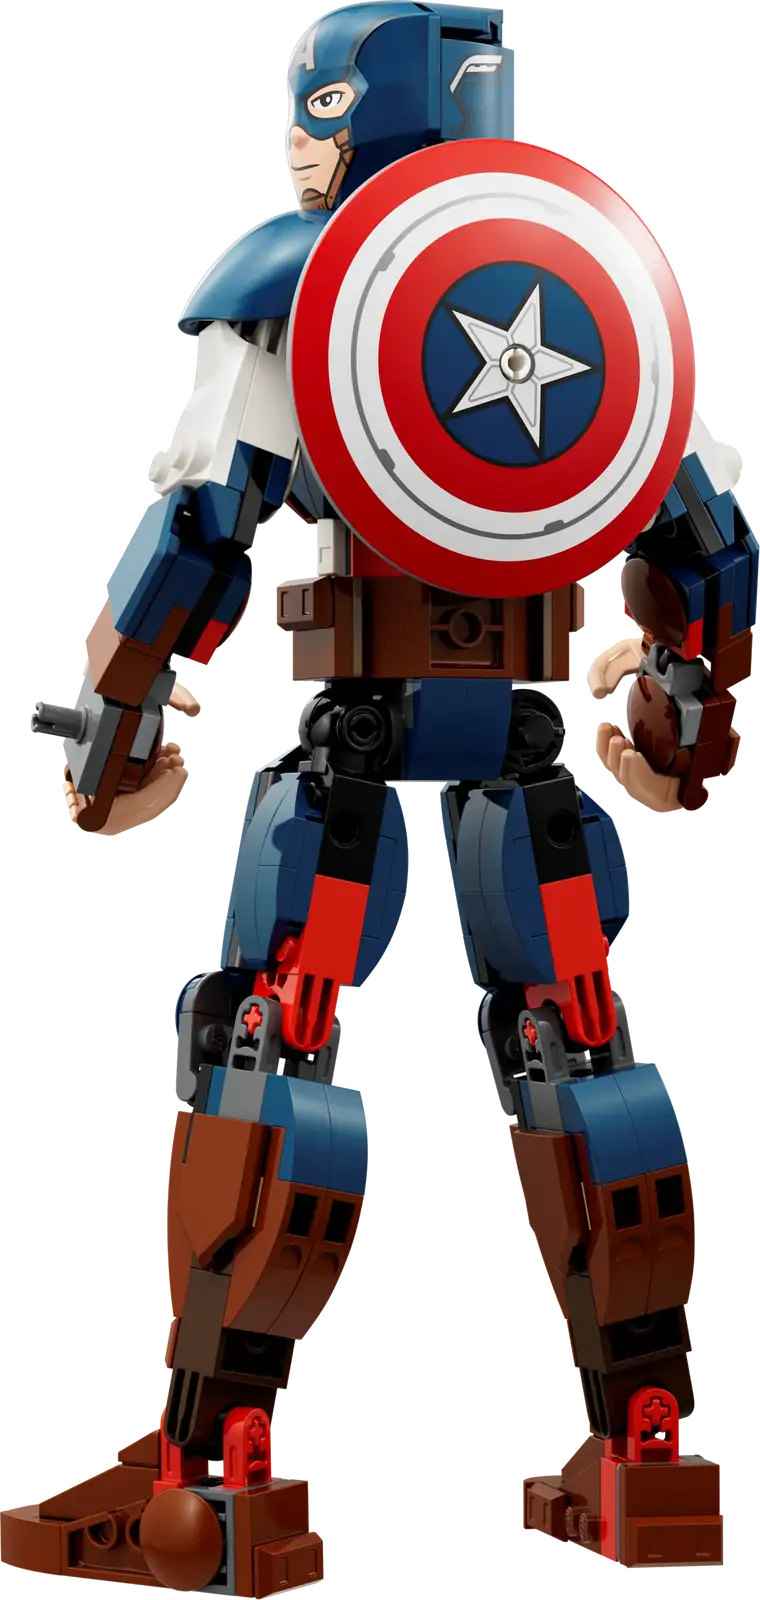 LEGO® Marvel Captain America Construction Figure 76258 Building Toy Set